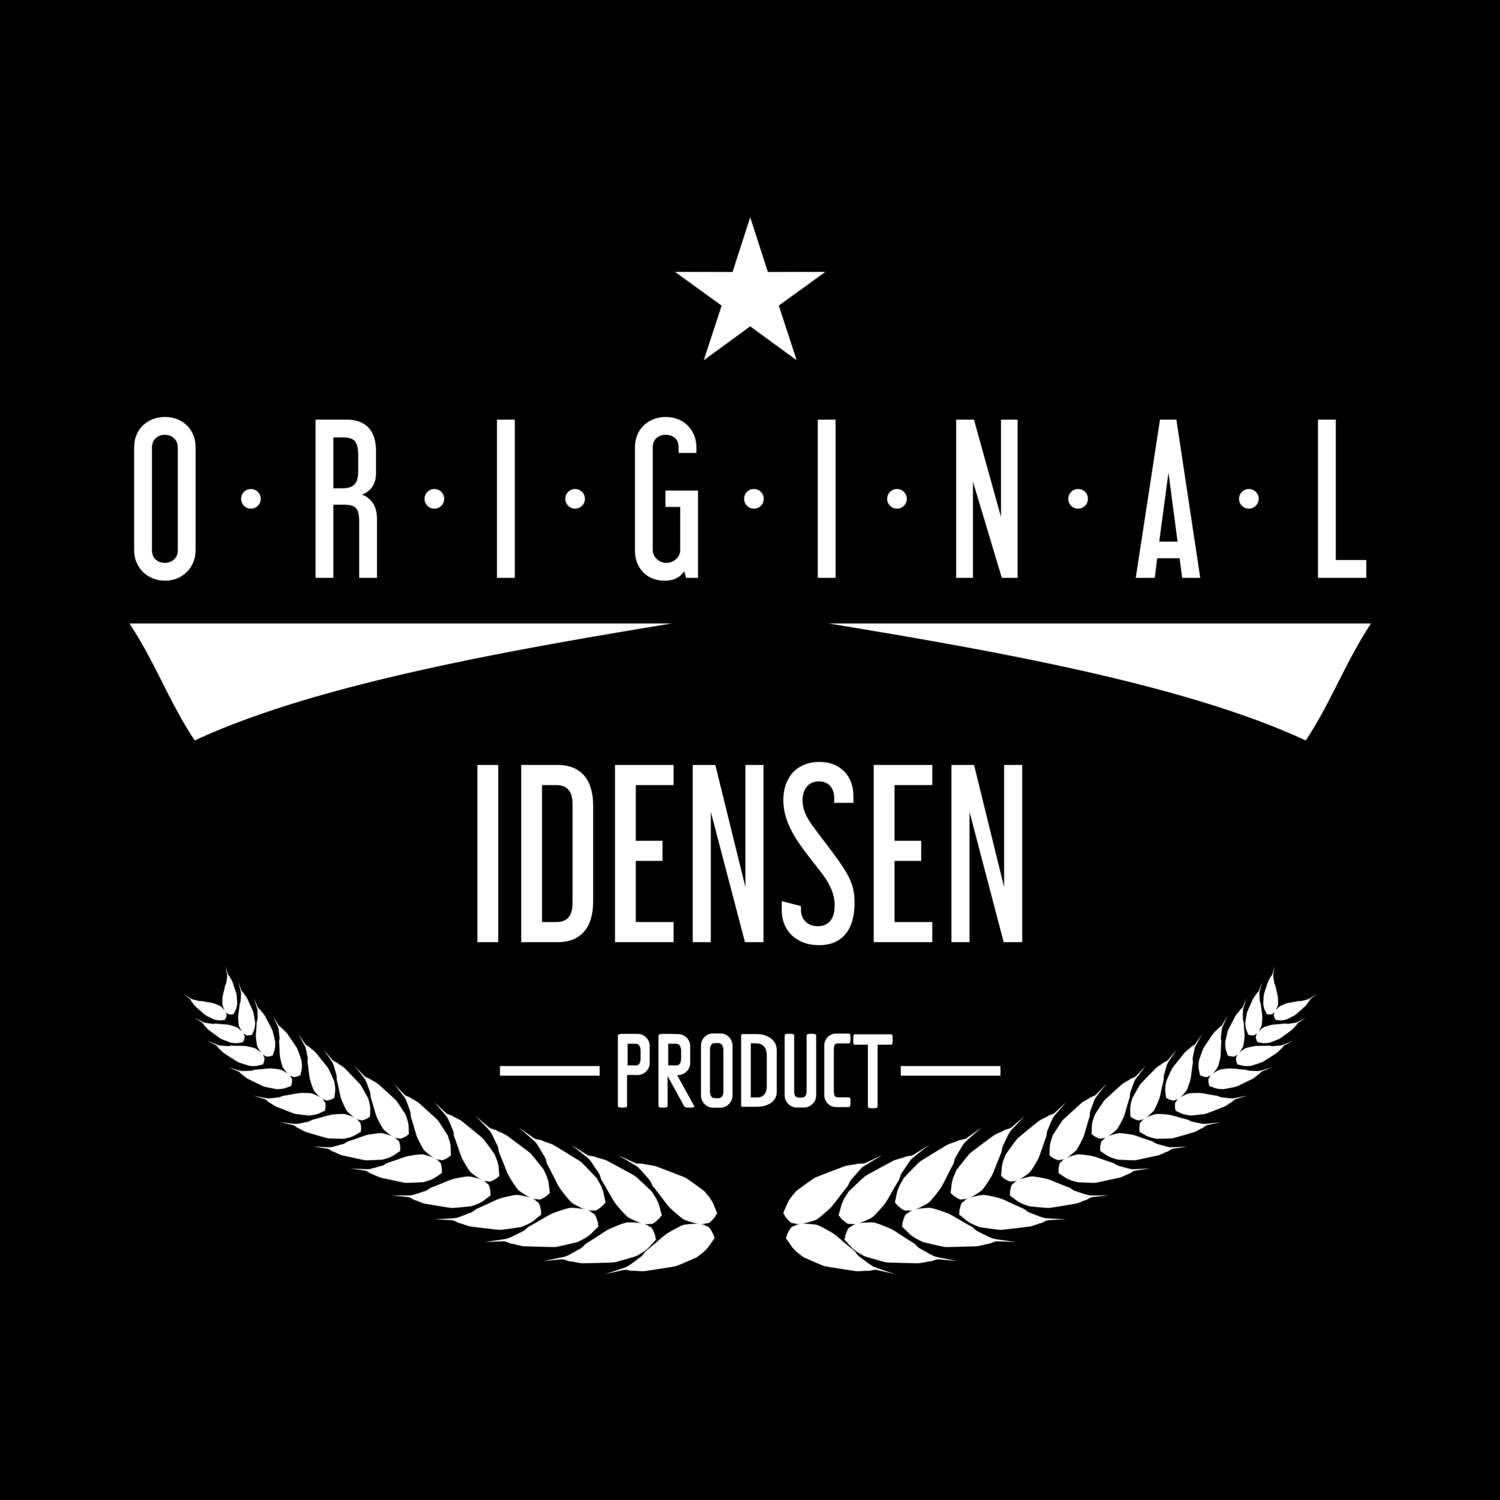 Idensen T-Shirt »Original Product«